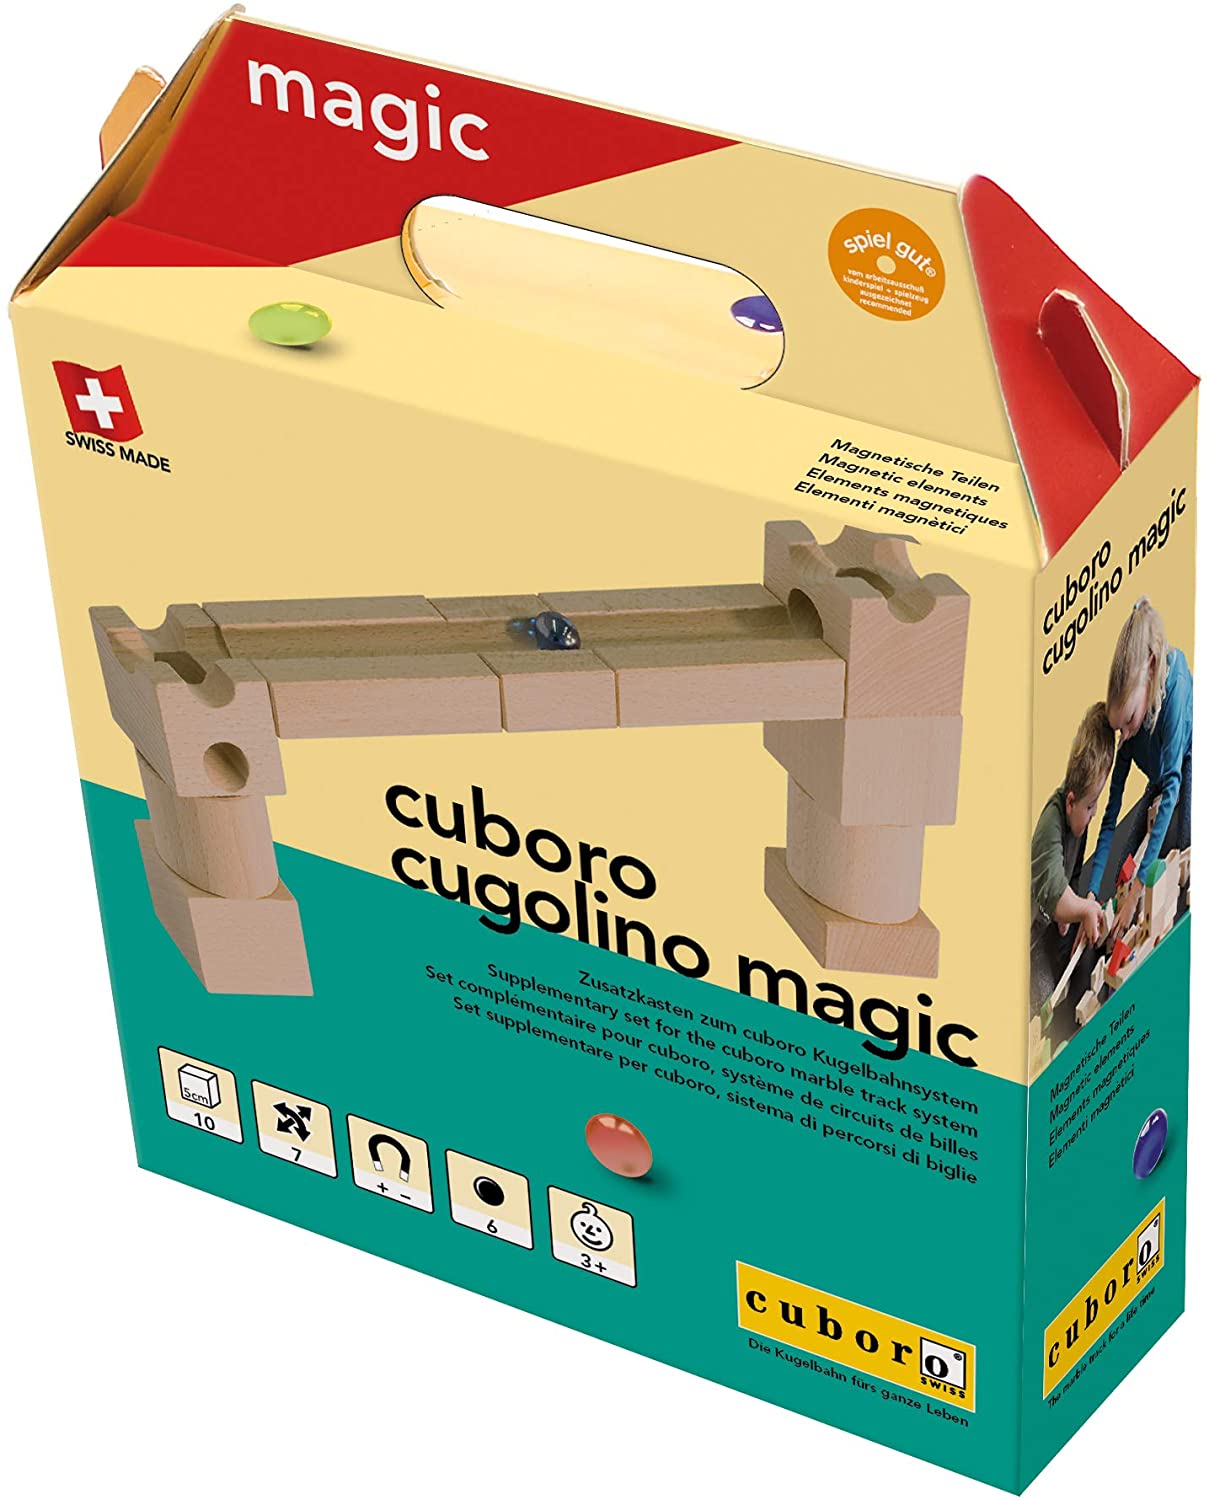 Cuboro Cugolino Magic (10 Piece Bridge Supplementary Set) – TopToy